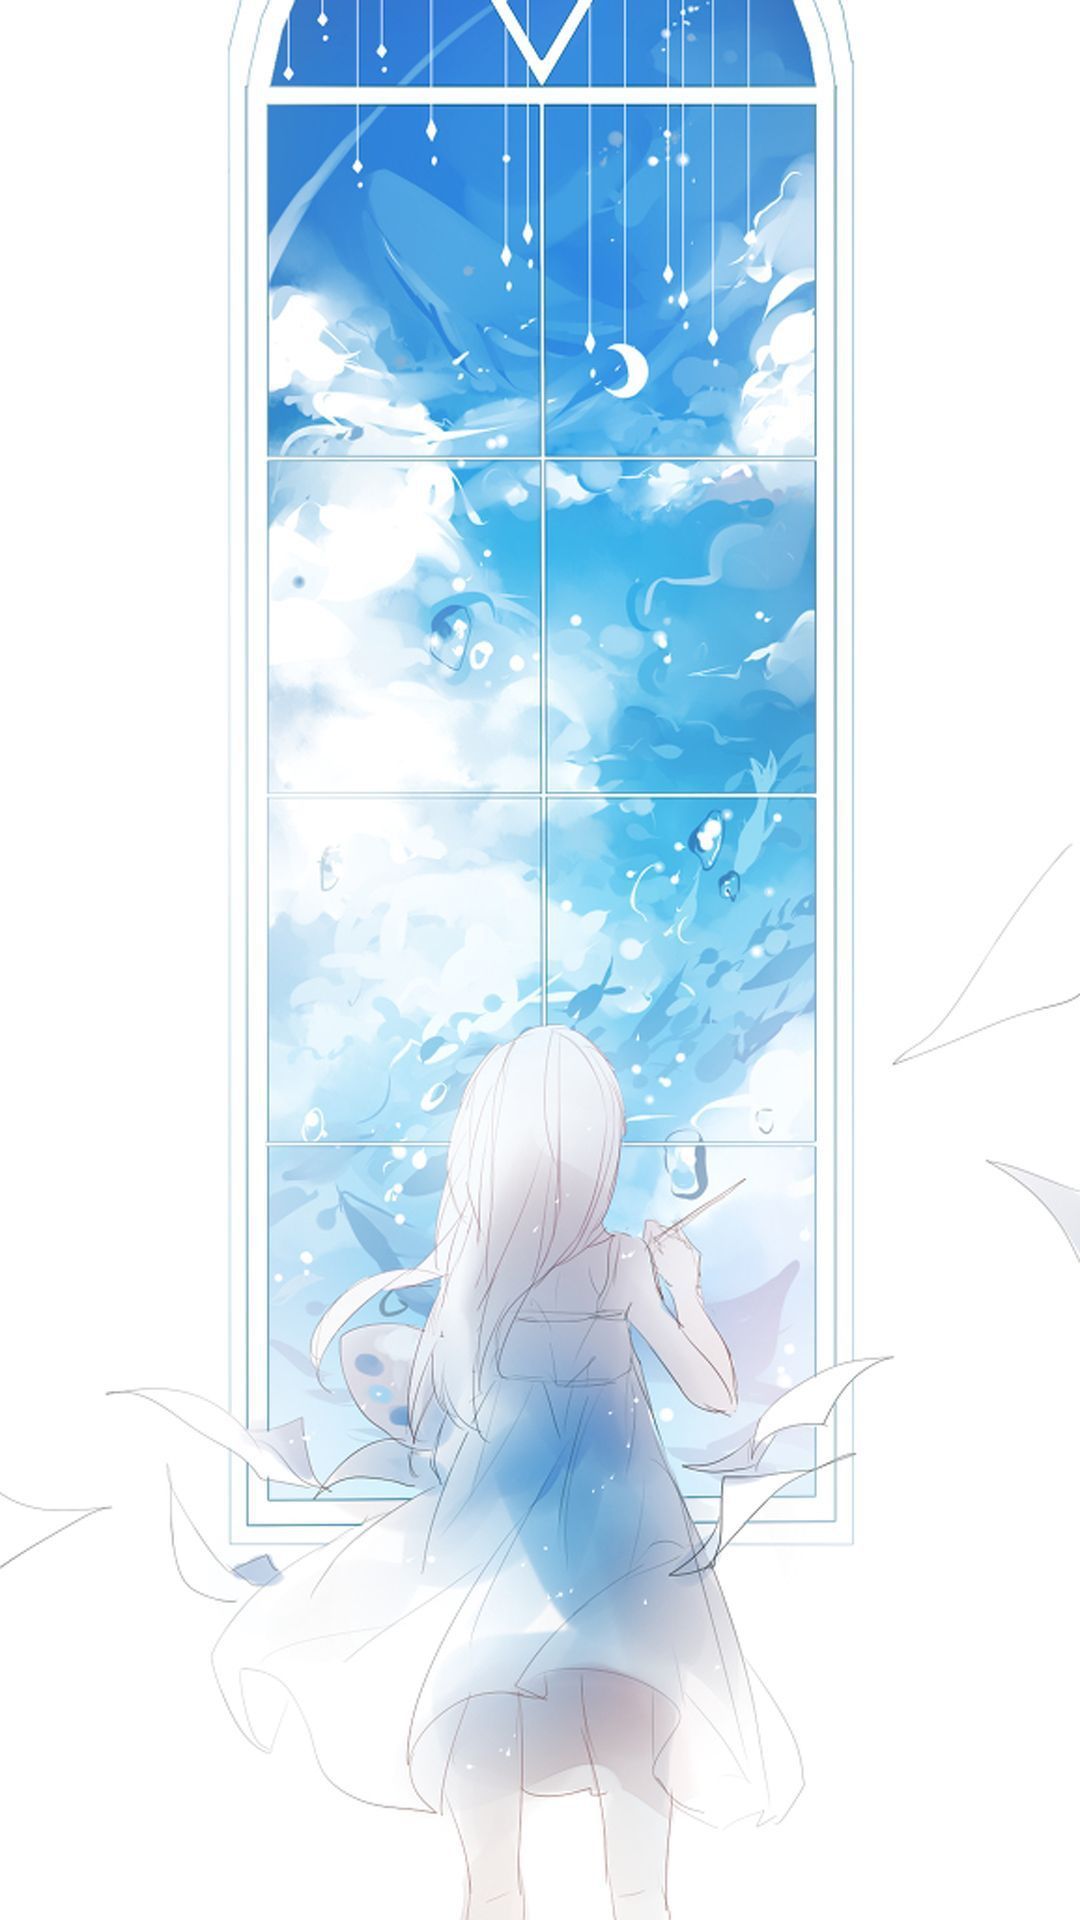 Dream in window. Anime wallpaper, Blue .com